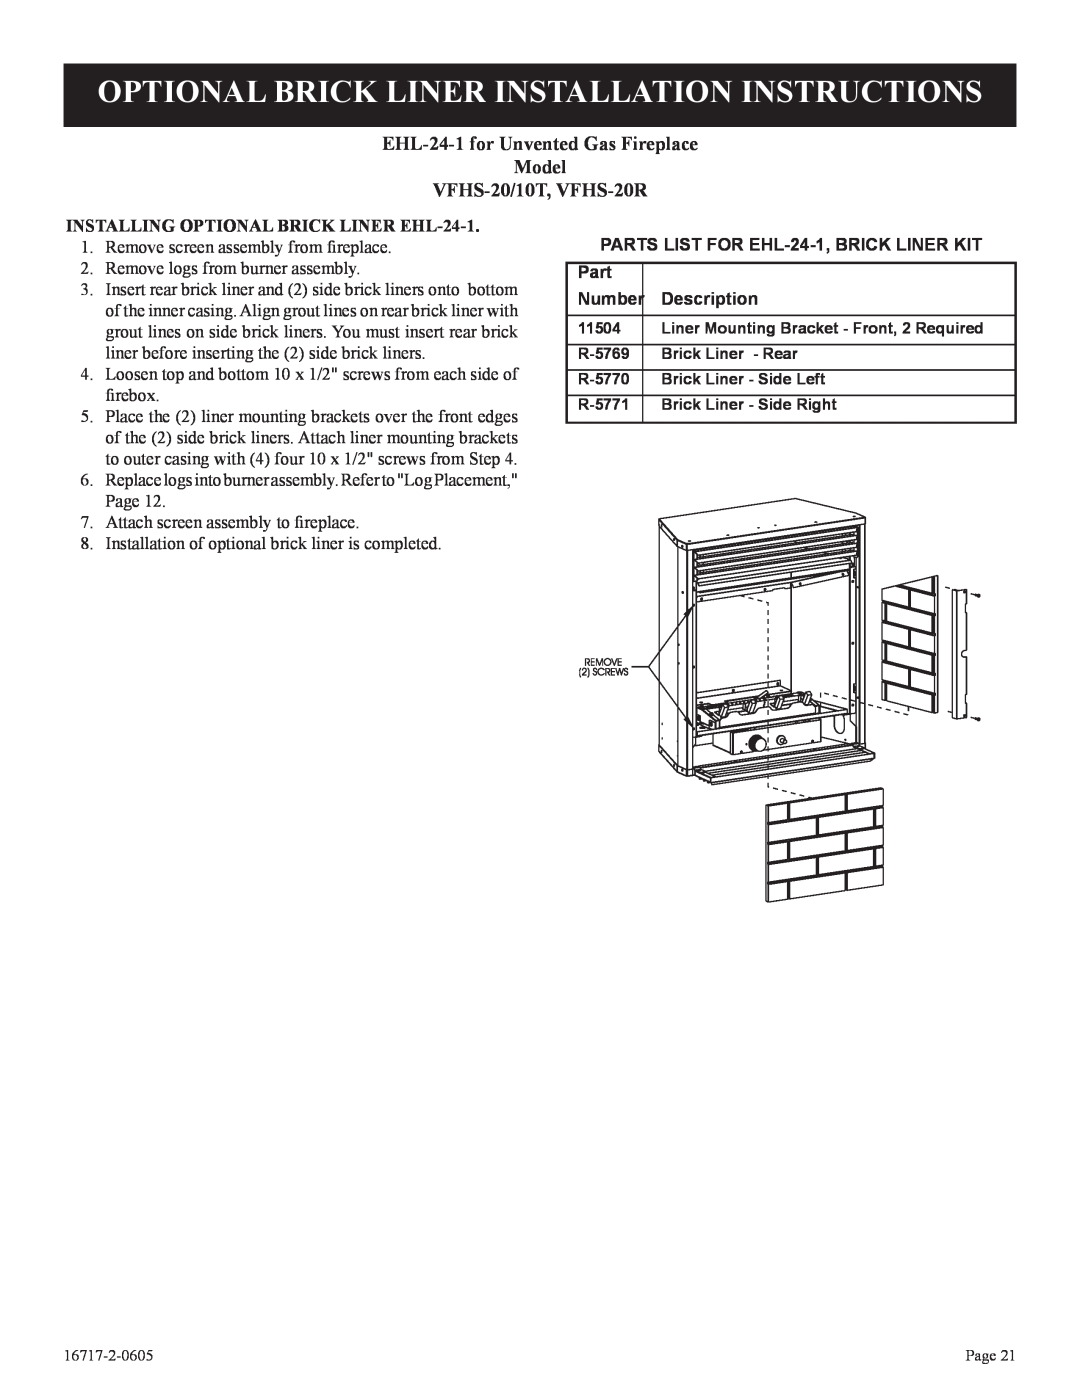 Empire Comfort Systems VFHS-20/10T-4 Optional Brick Liner Installation Instructions, VFHS-20/10T, VFHS-20R, Part 